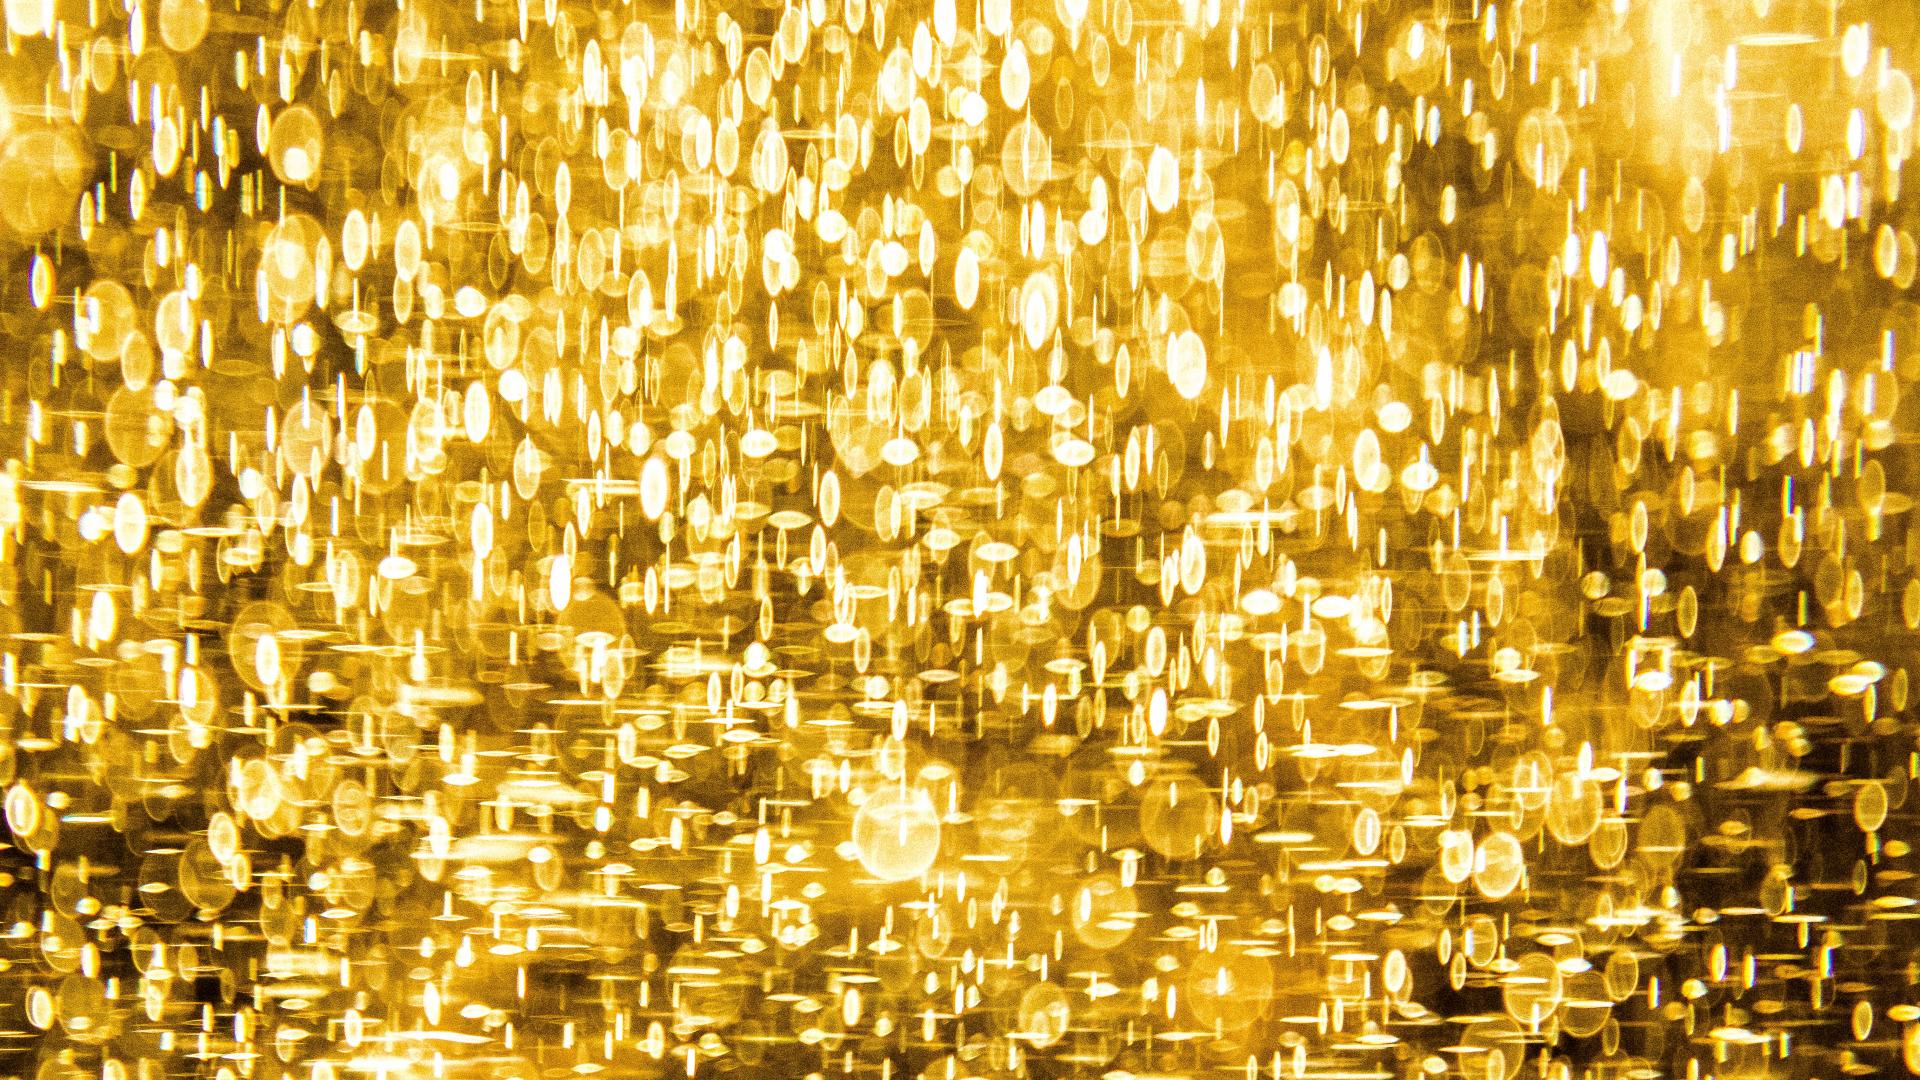 Gold glitter shining against a dark background